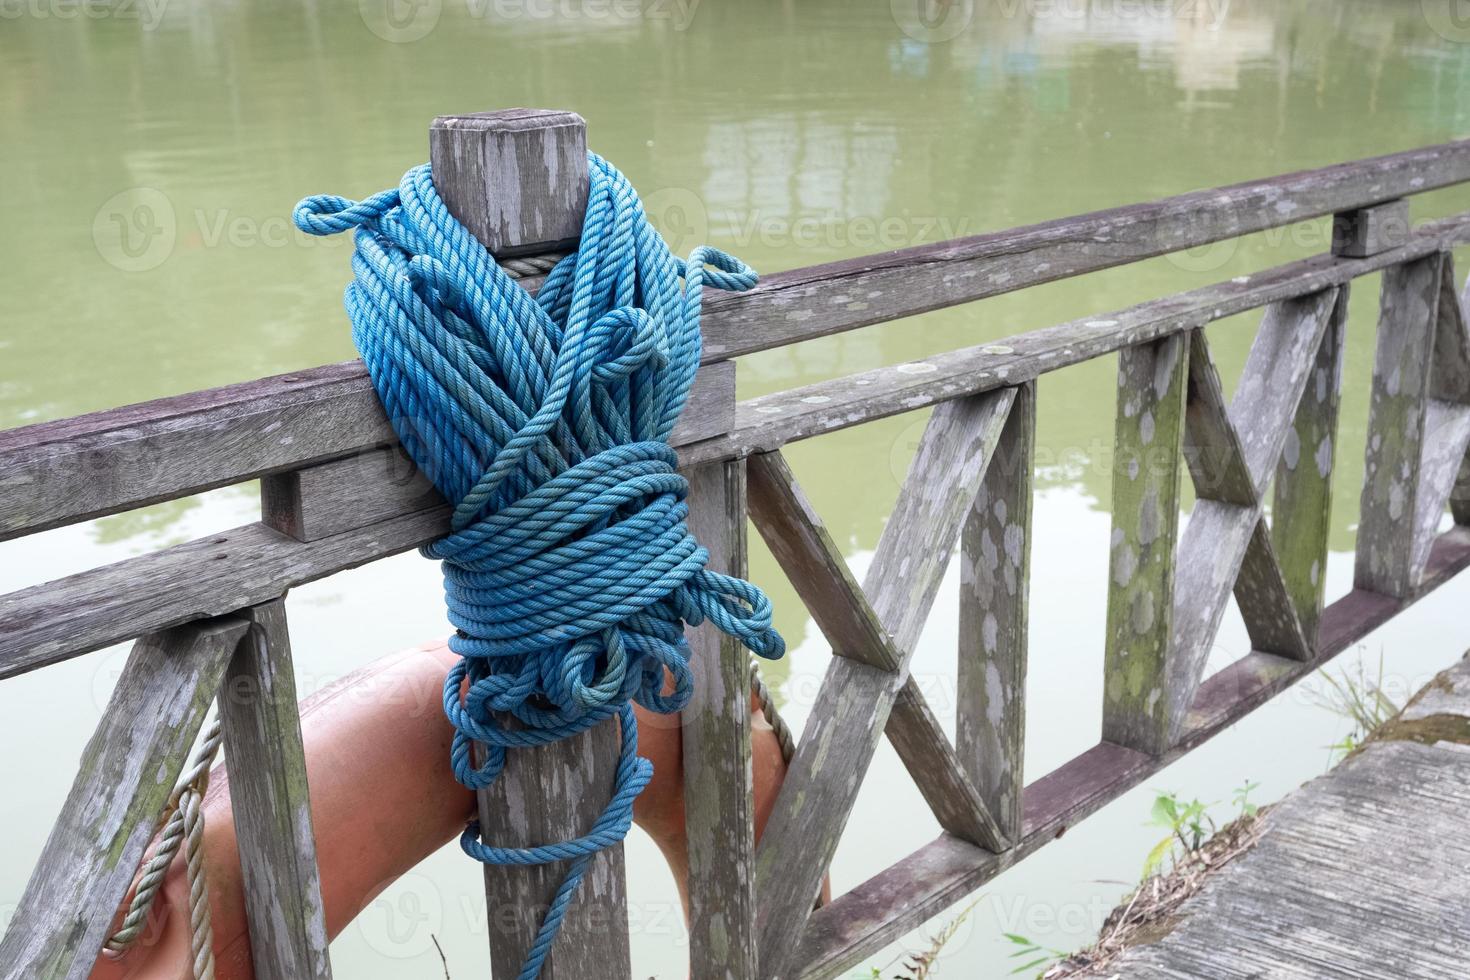 foco seletivo na corda azul usada para amarrar navios em lagos e rios foto